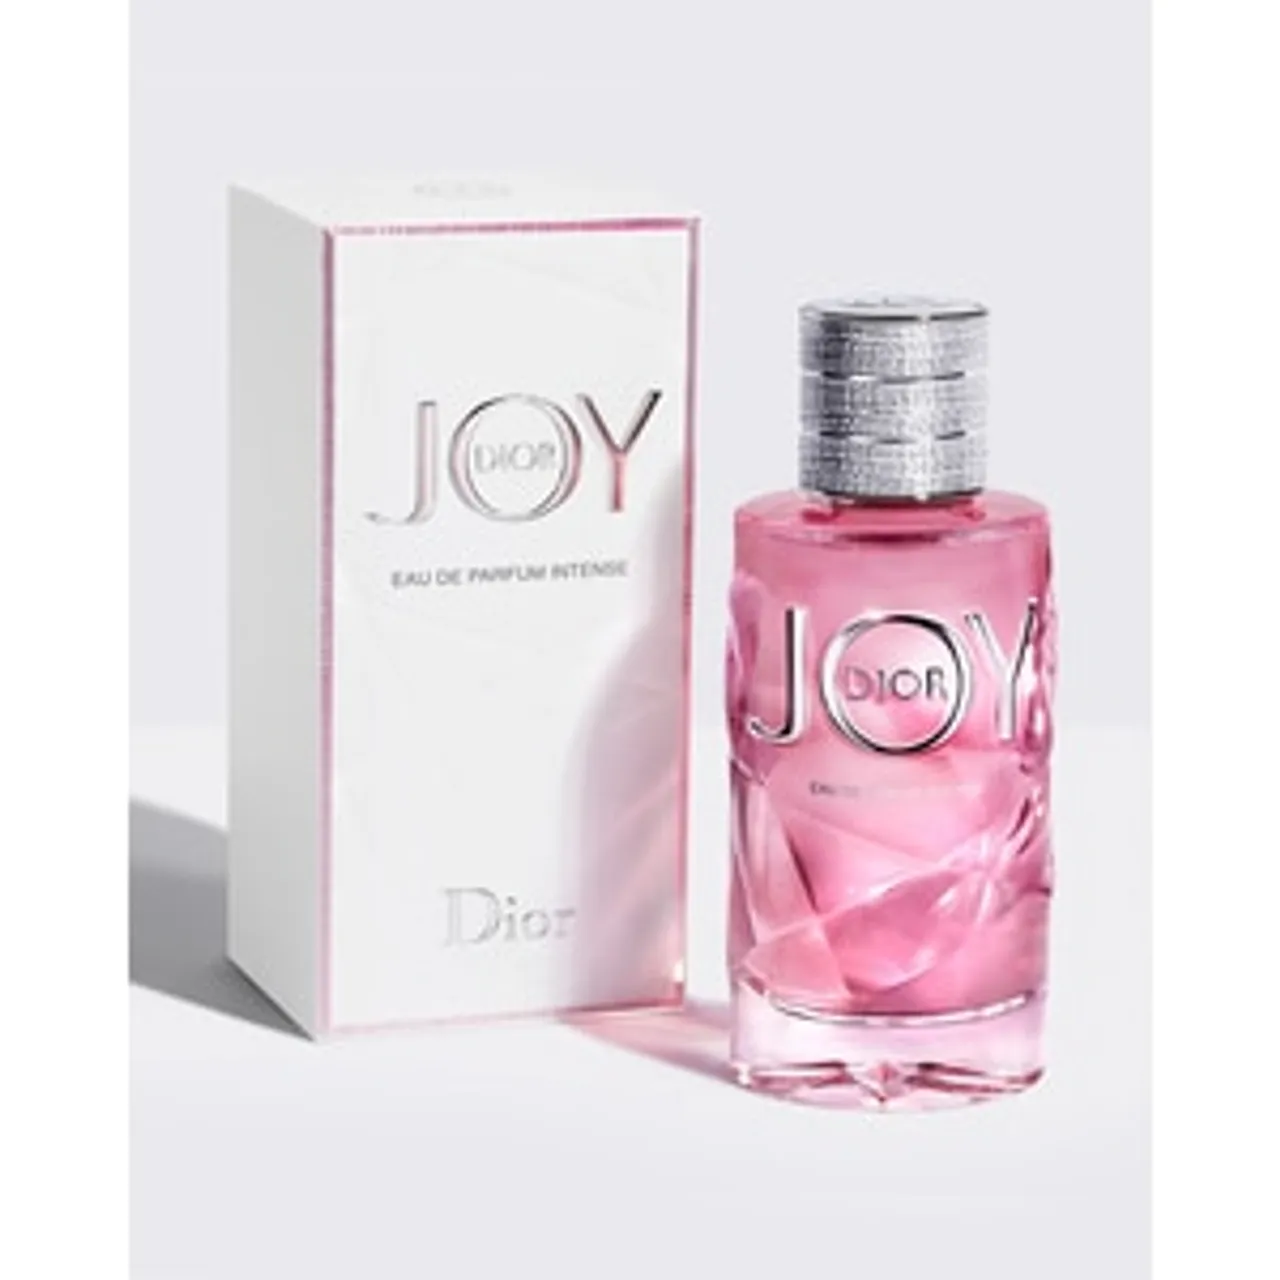 Dior Joy By Dior EAU DE PARFUM INTENSE 90 ML